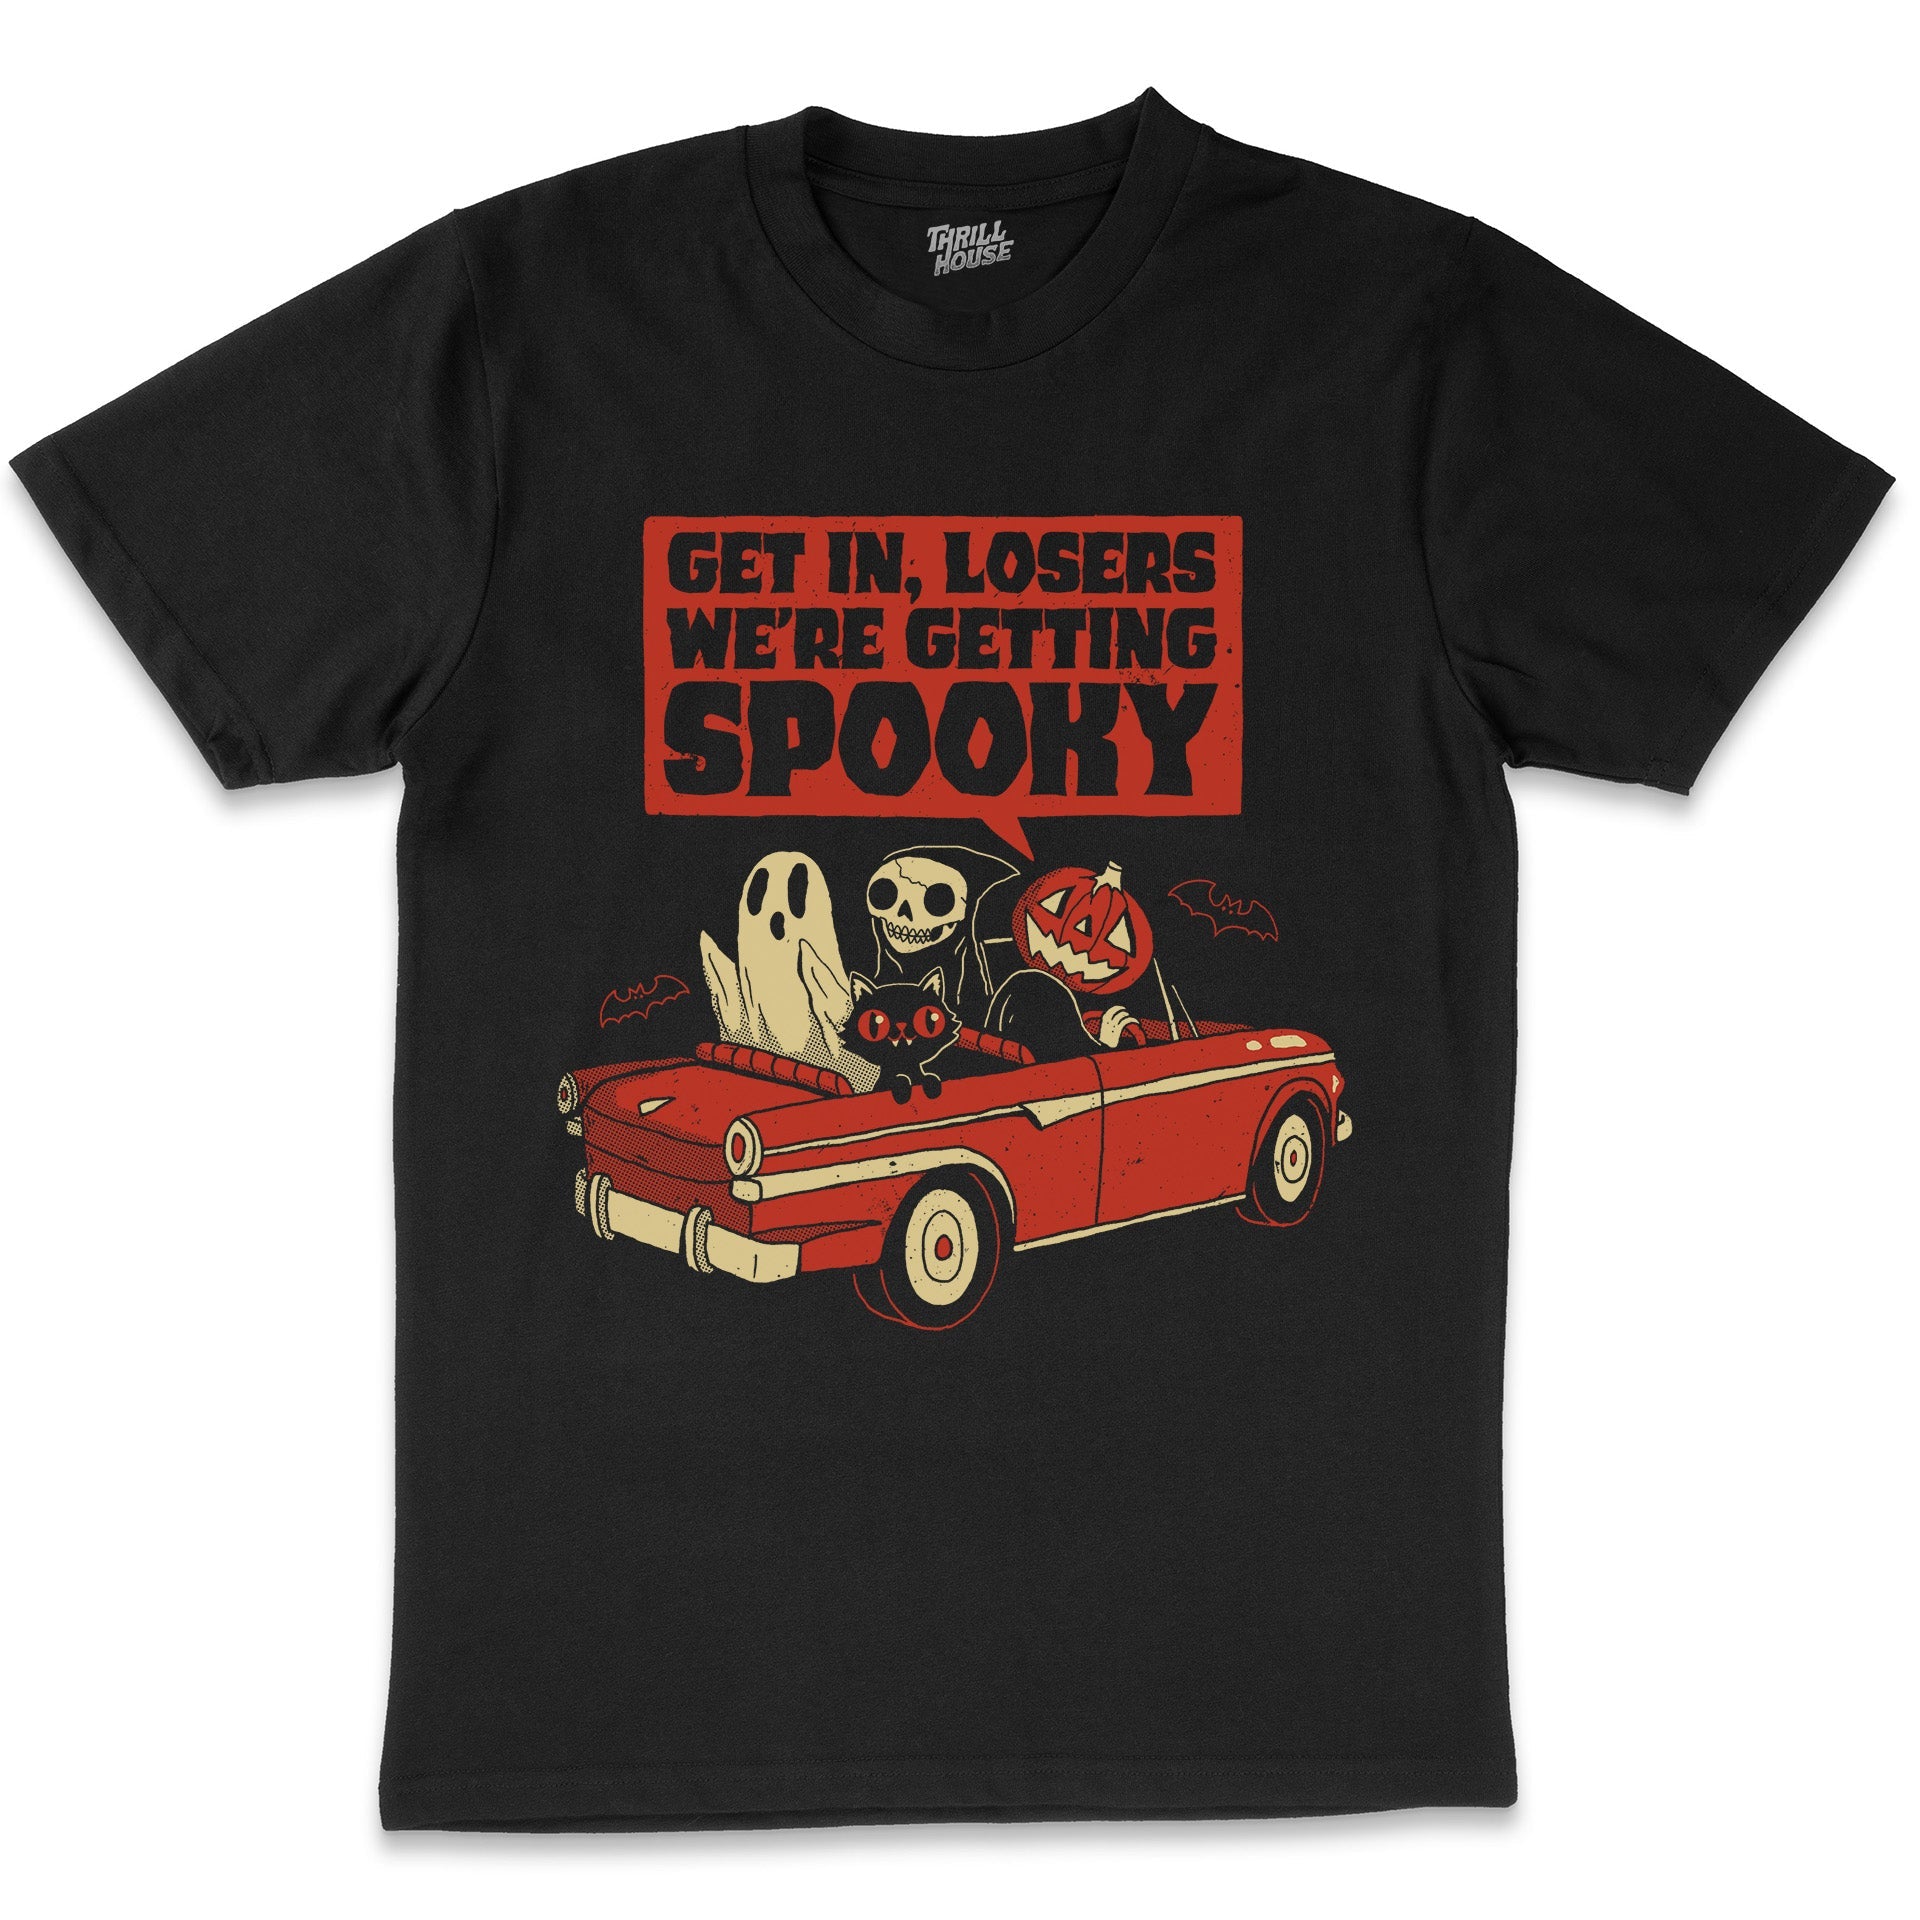 Getting Spooky Funny Halloween Grim Reaper Ghosts Horror Parody Dark Humour Cotton T-Shirt